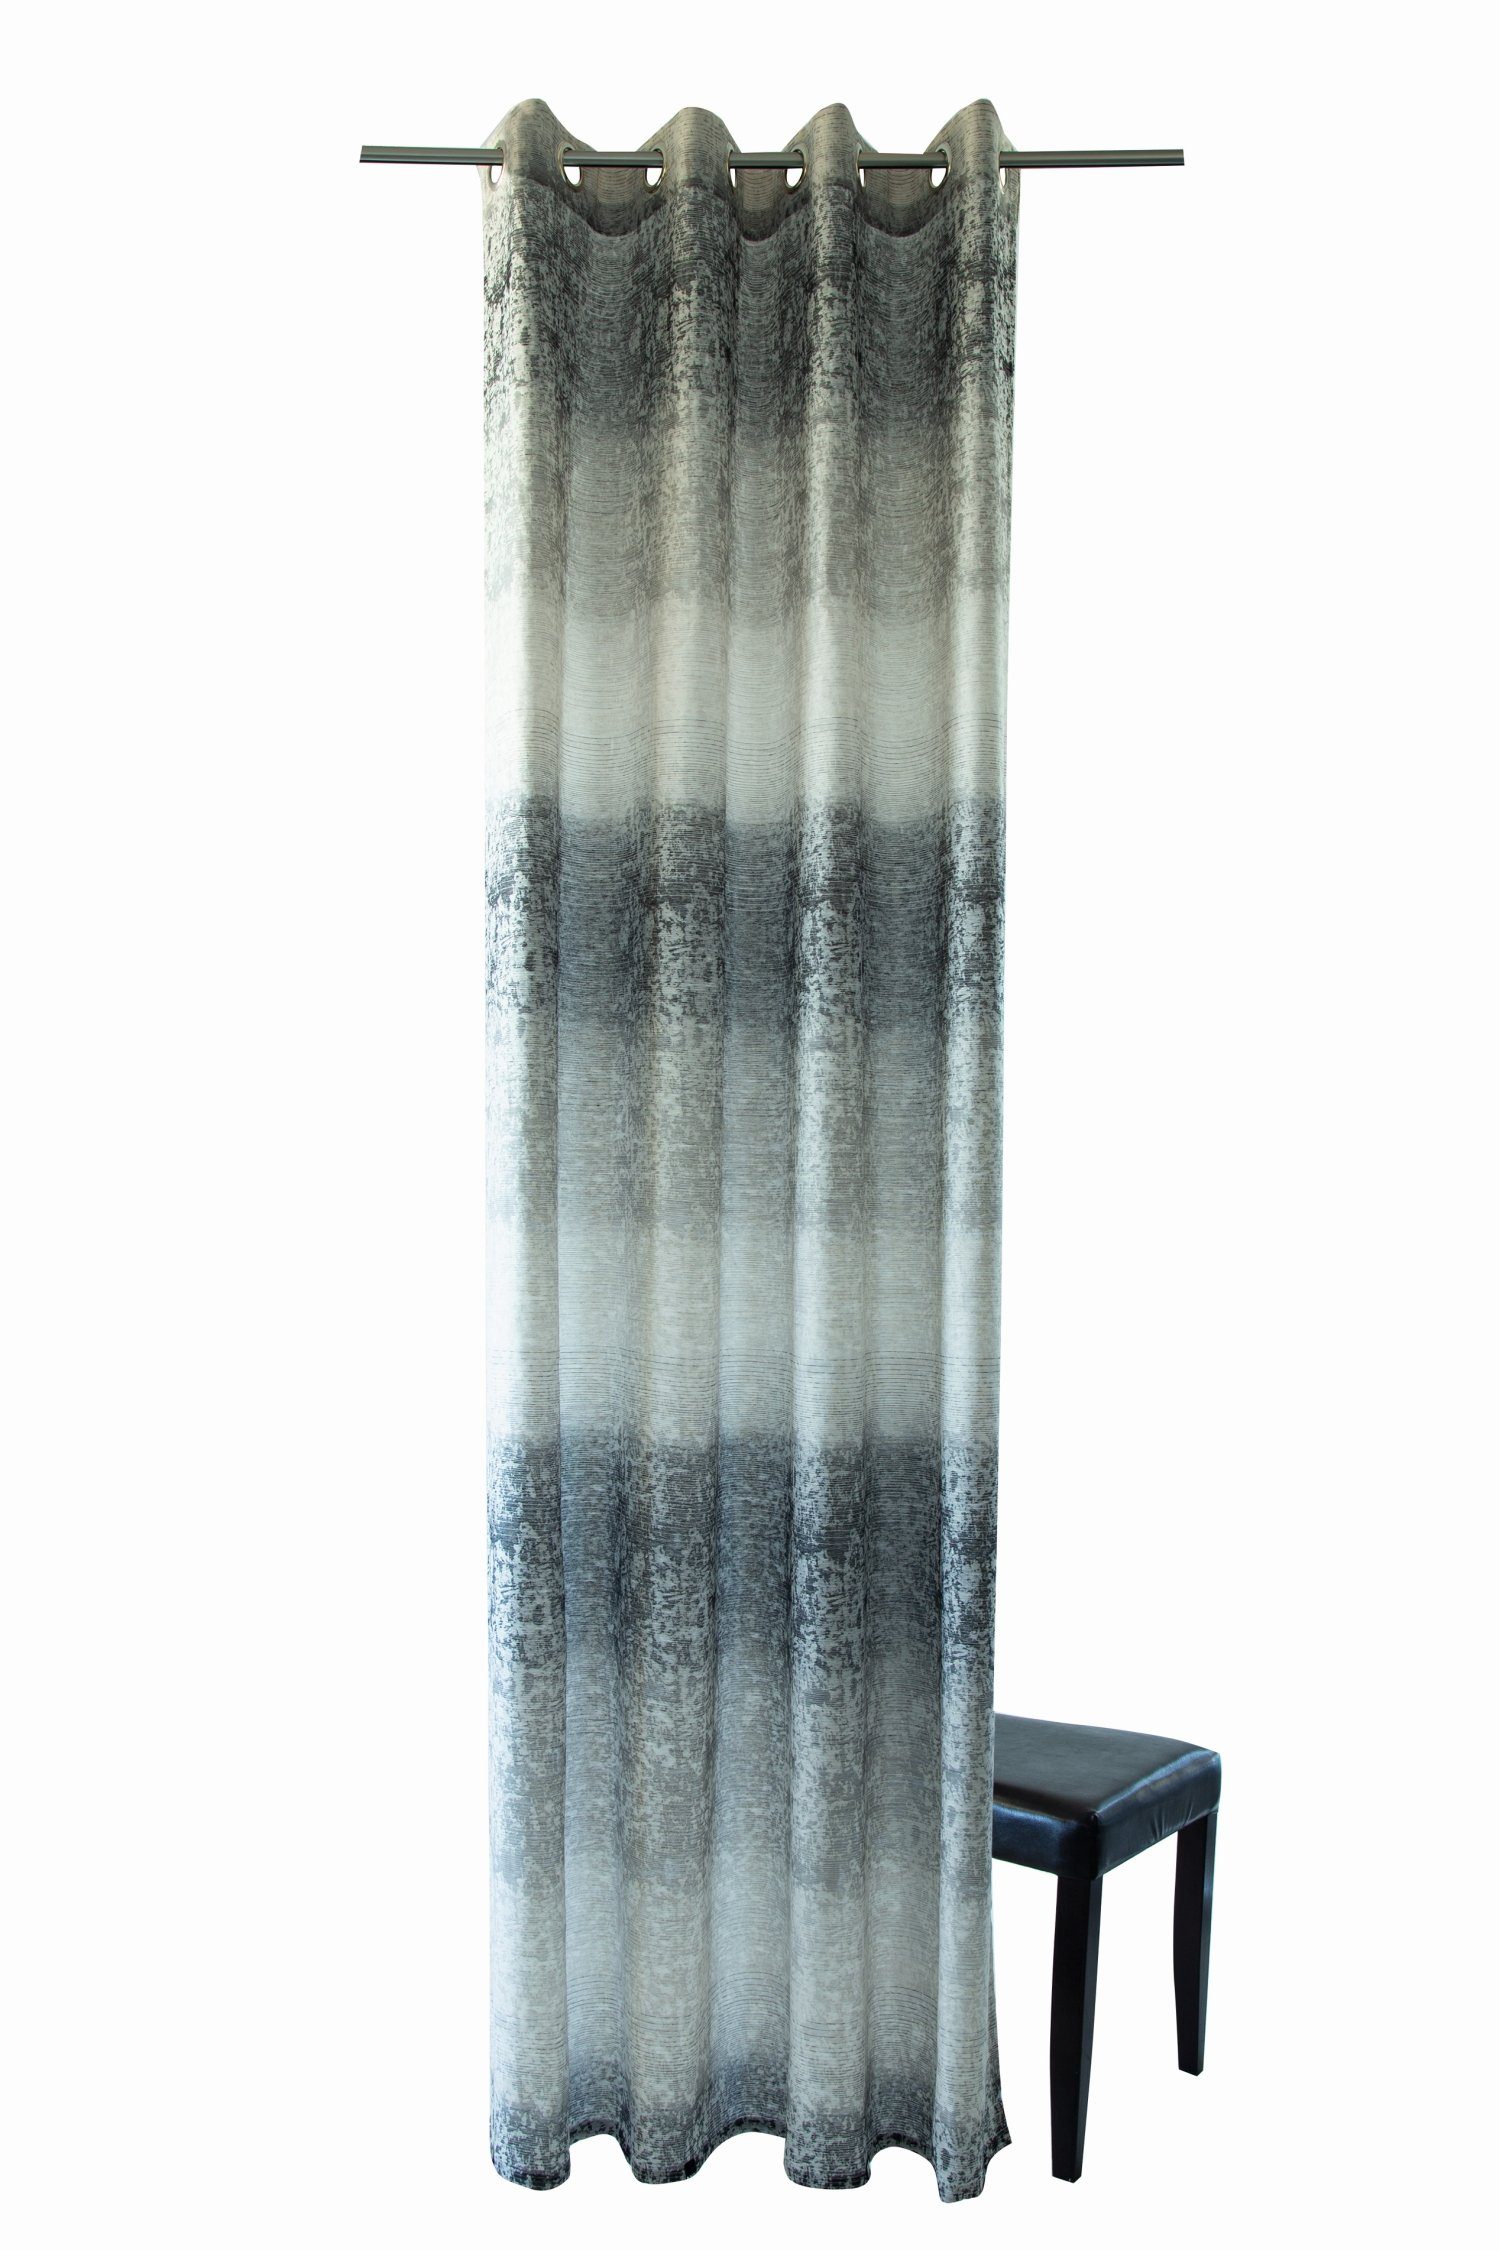 Vorhang, HOMING, Ösenschal Freya 140x245cm Farbe: anthrazit | Fertiggardinen